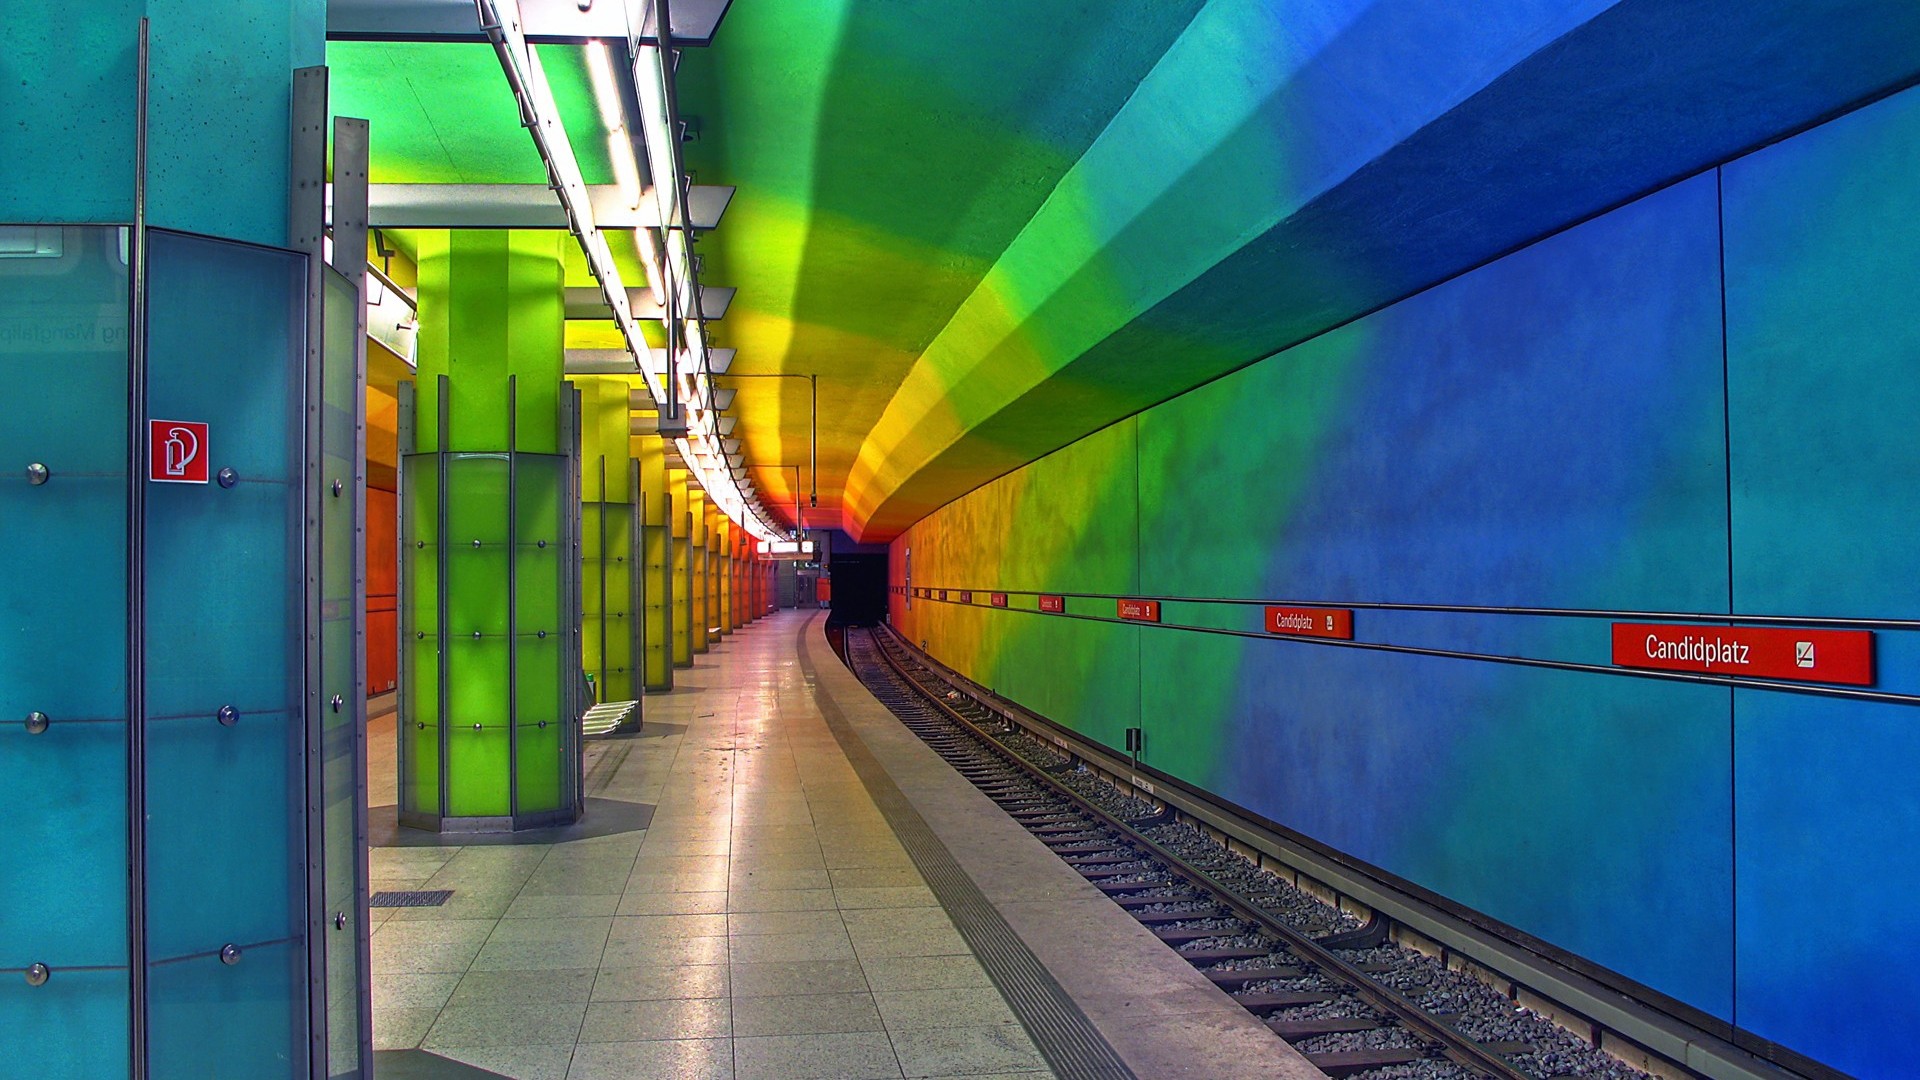 Включи живую станцию. Мюнхен: станция Candidplatz. Лиссабон метро красивые станции. Станция метро Гамла стан. Красивые станции Московского метрополитена.